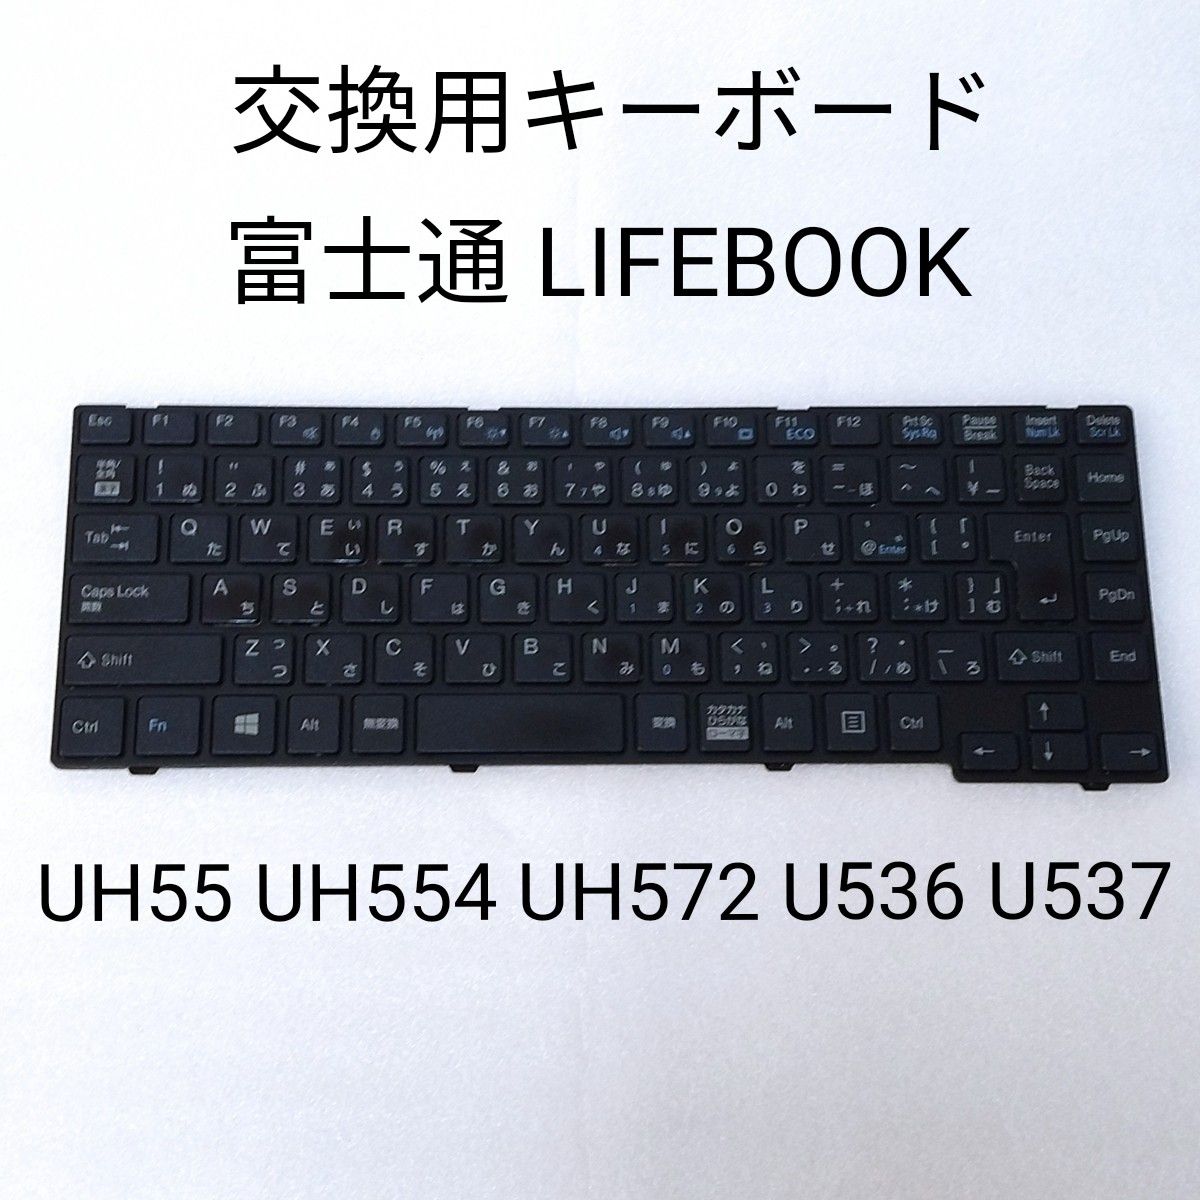 富士通 LIFEBOOK 交換用キーボード CP638597-01 UH55 UH554 UH572 U536 U537